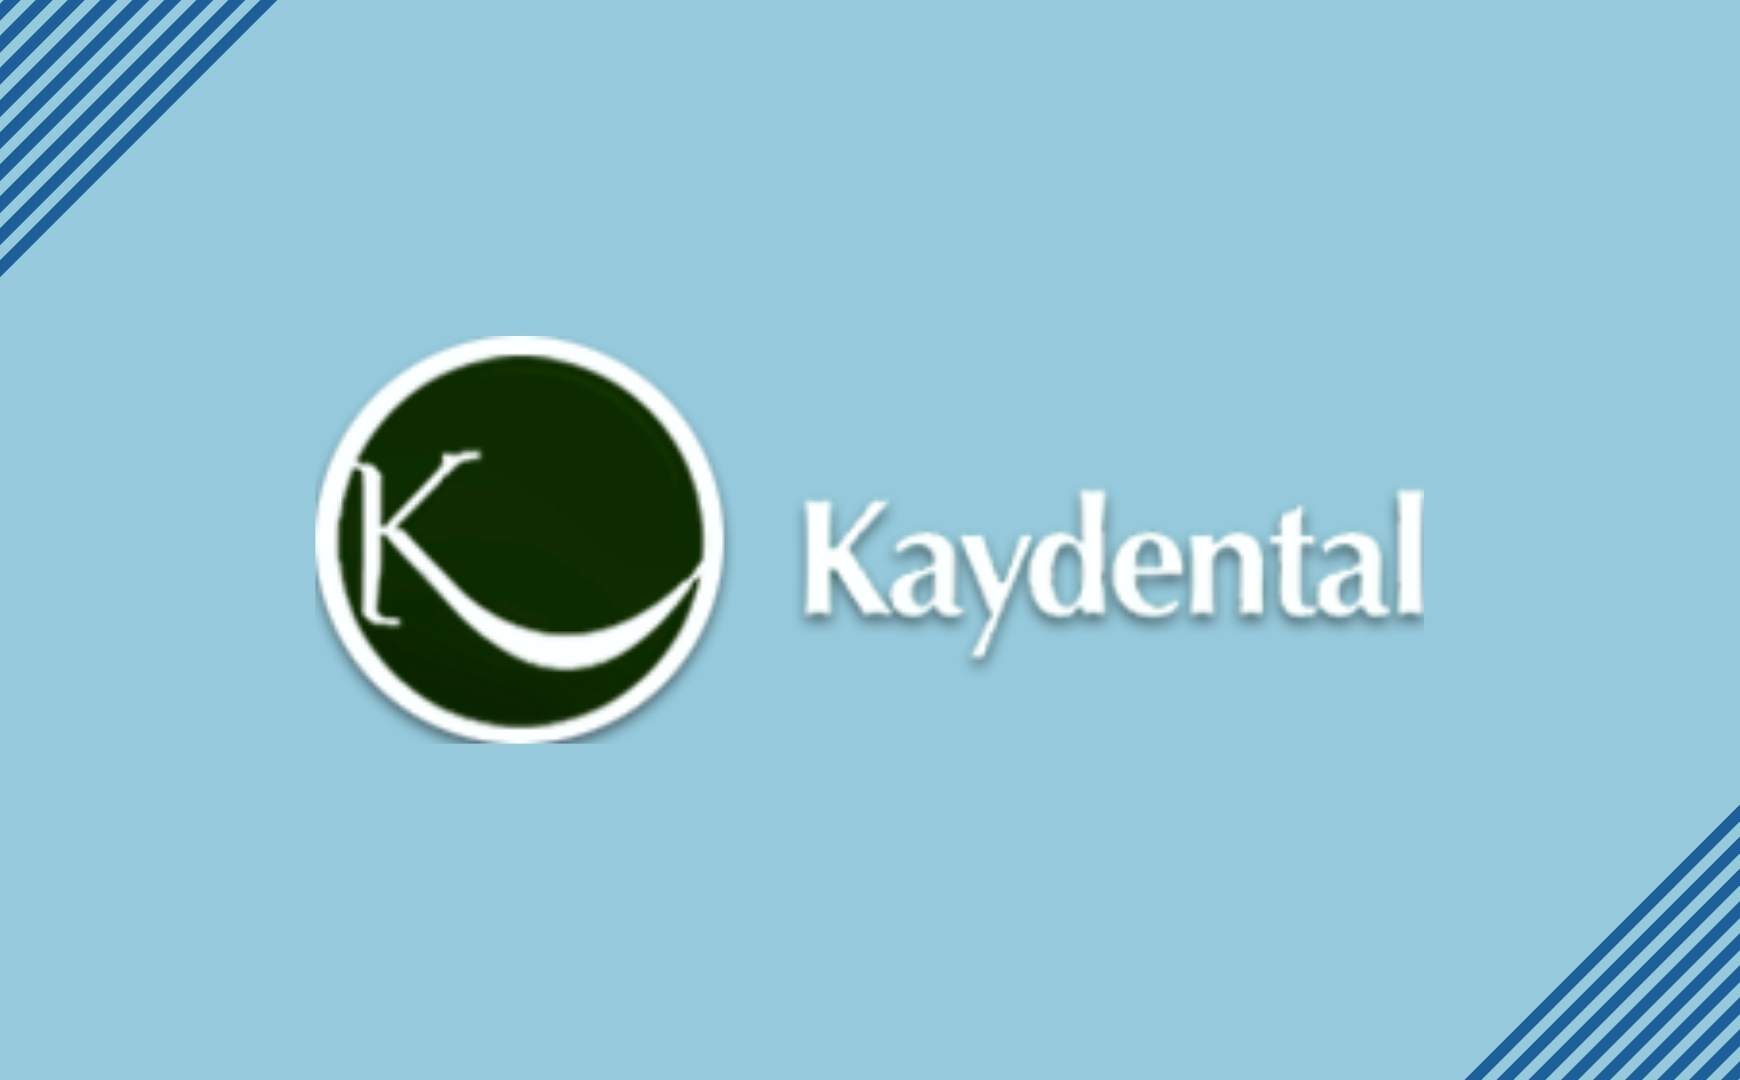 North York Dental Centre (KayDental) Logo